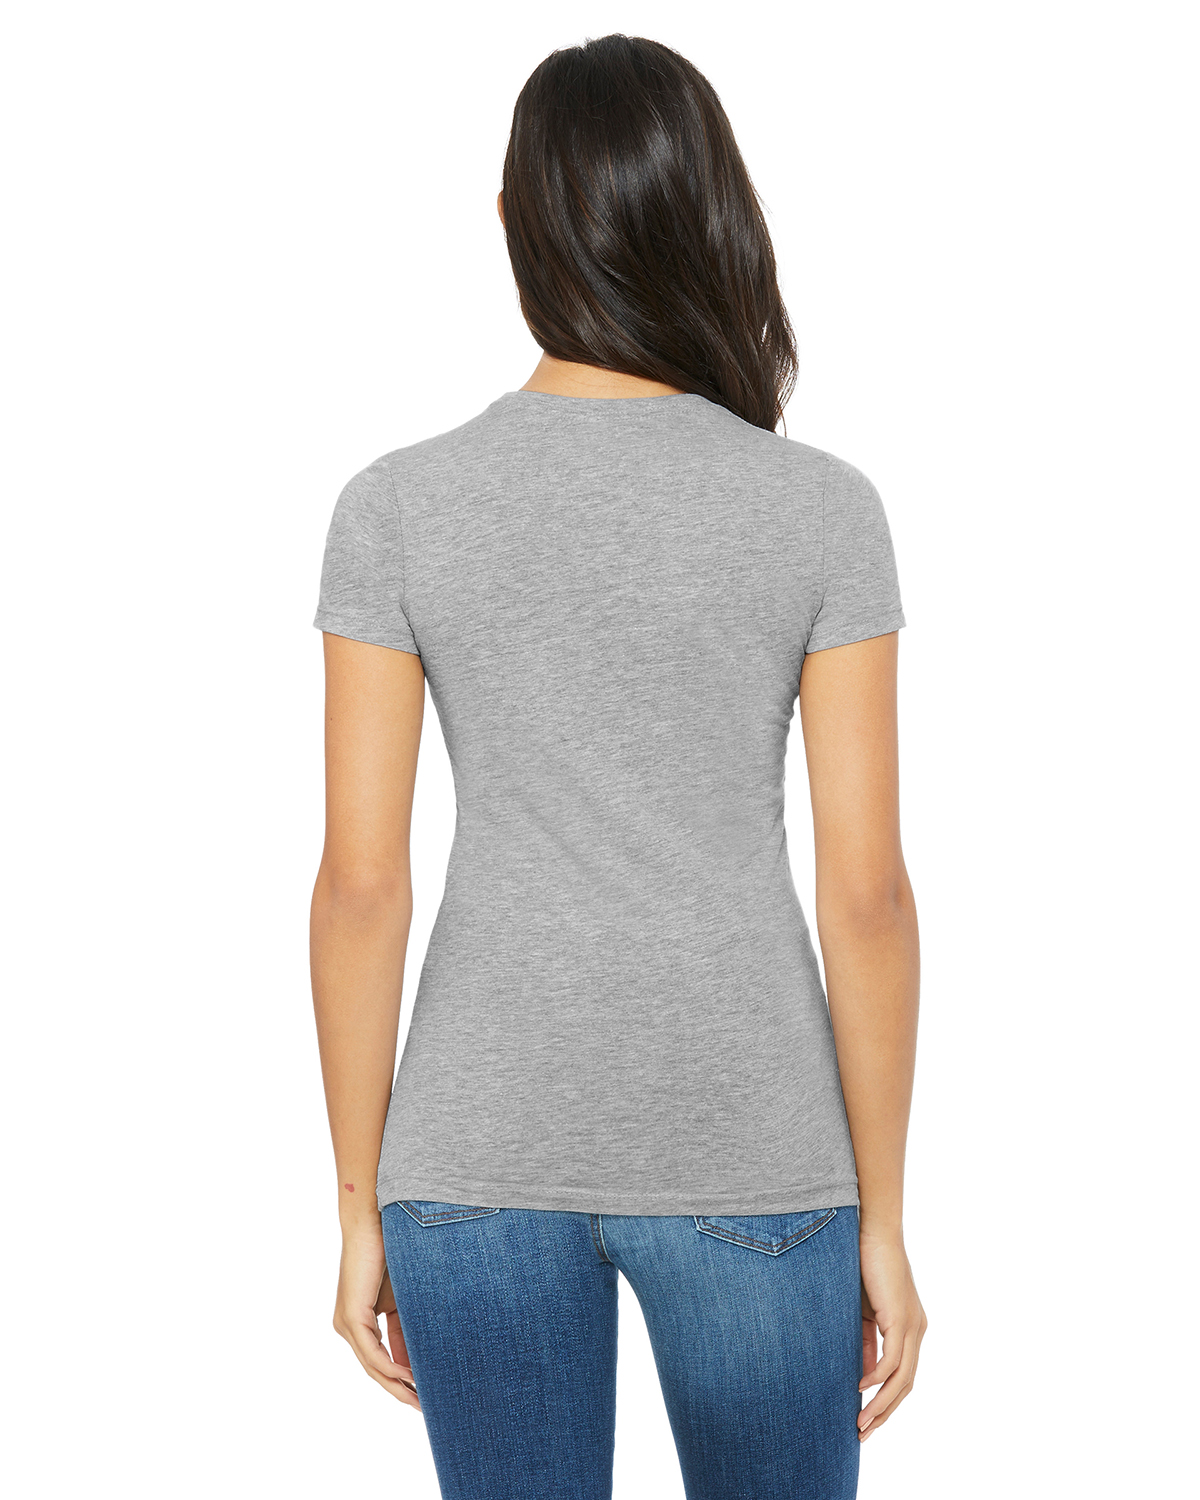 NEW Bella Ladies Favorite Tee Cotton Longer T-Shirt Top Womens Size S ...